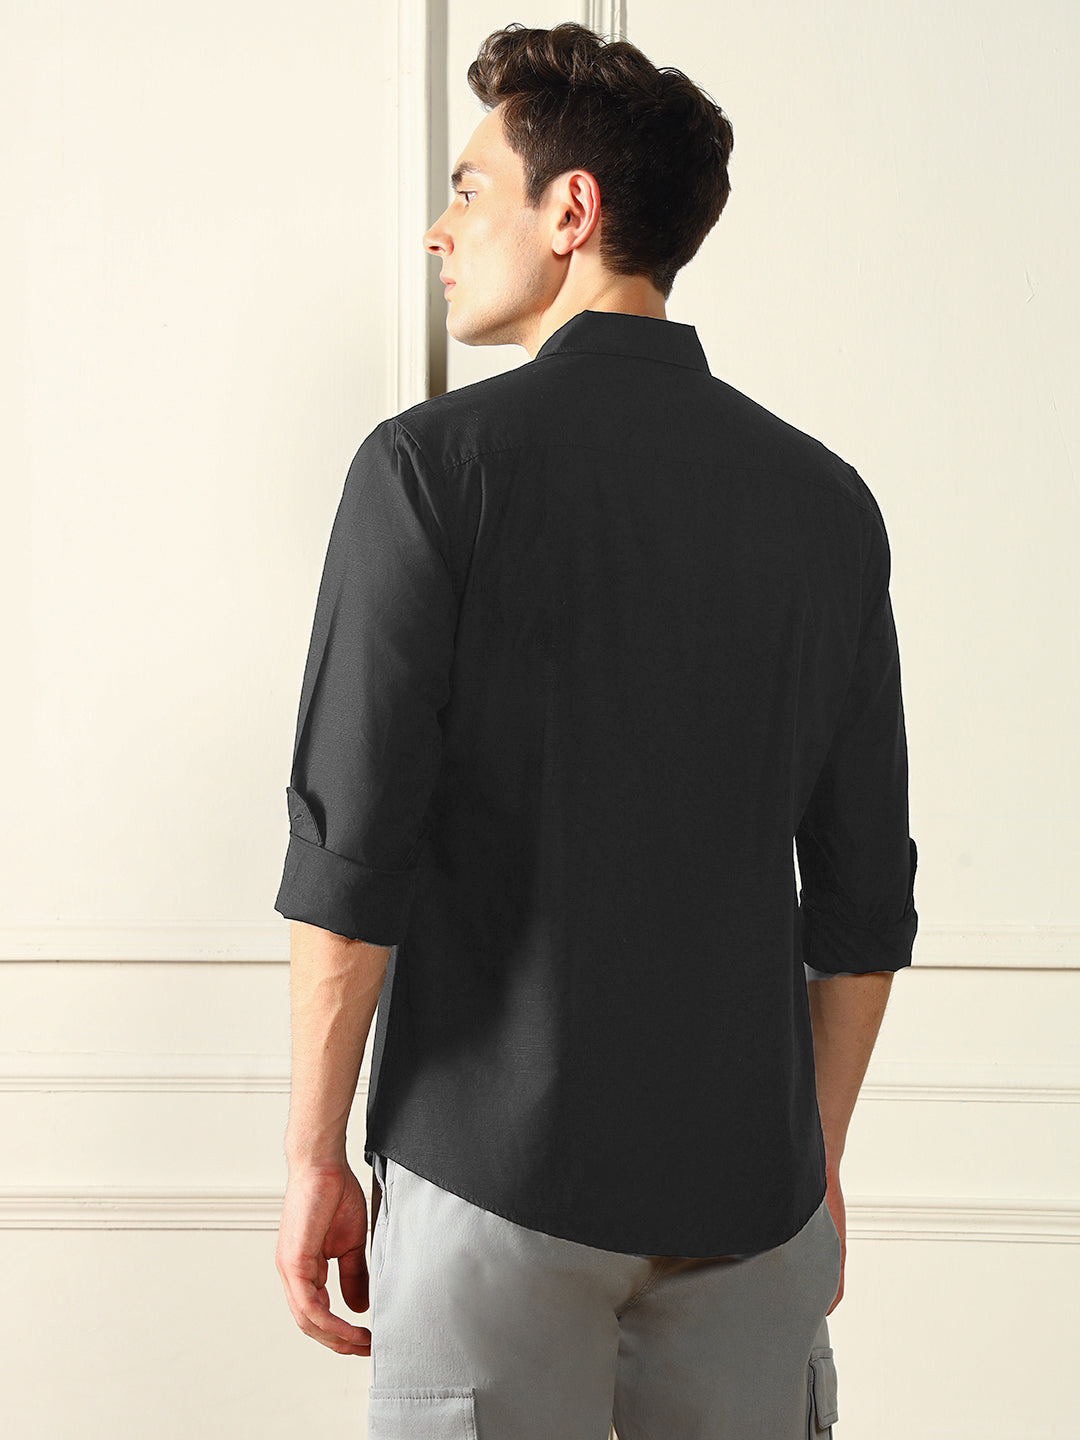 Dennis Lingo Men's Spread Collar Regular Fit Solid Black Casual Shirt